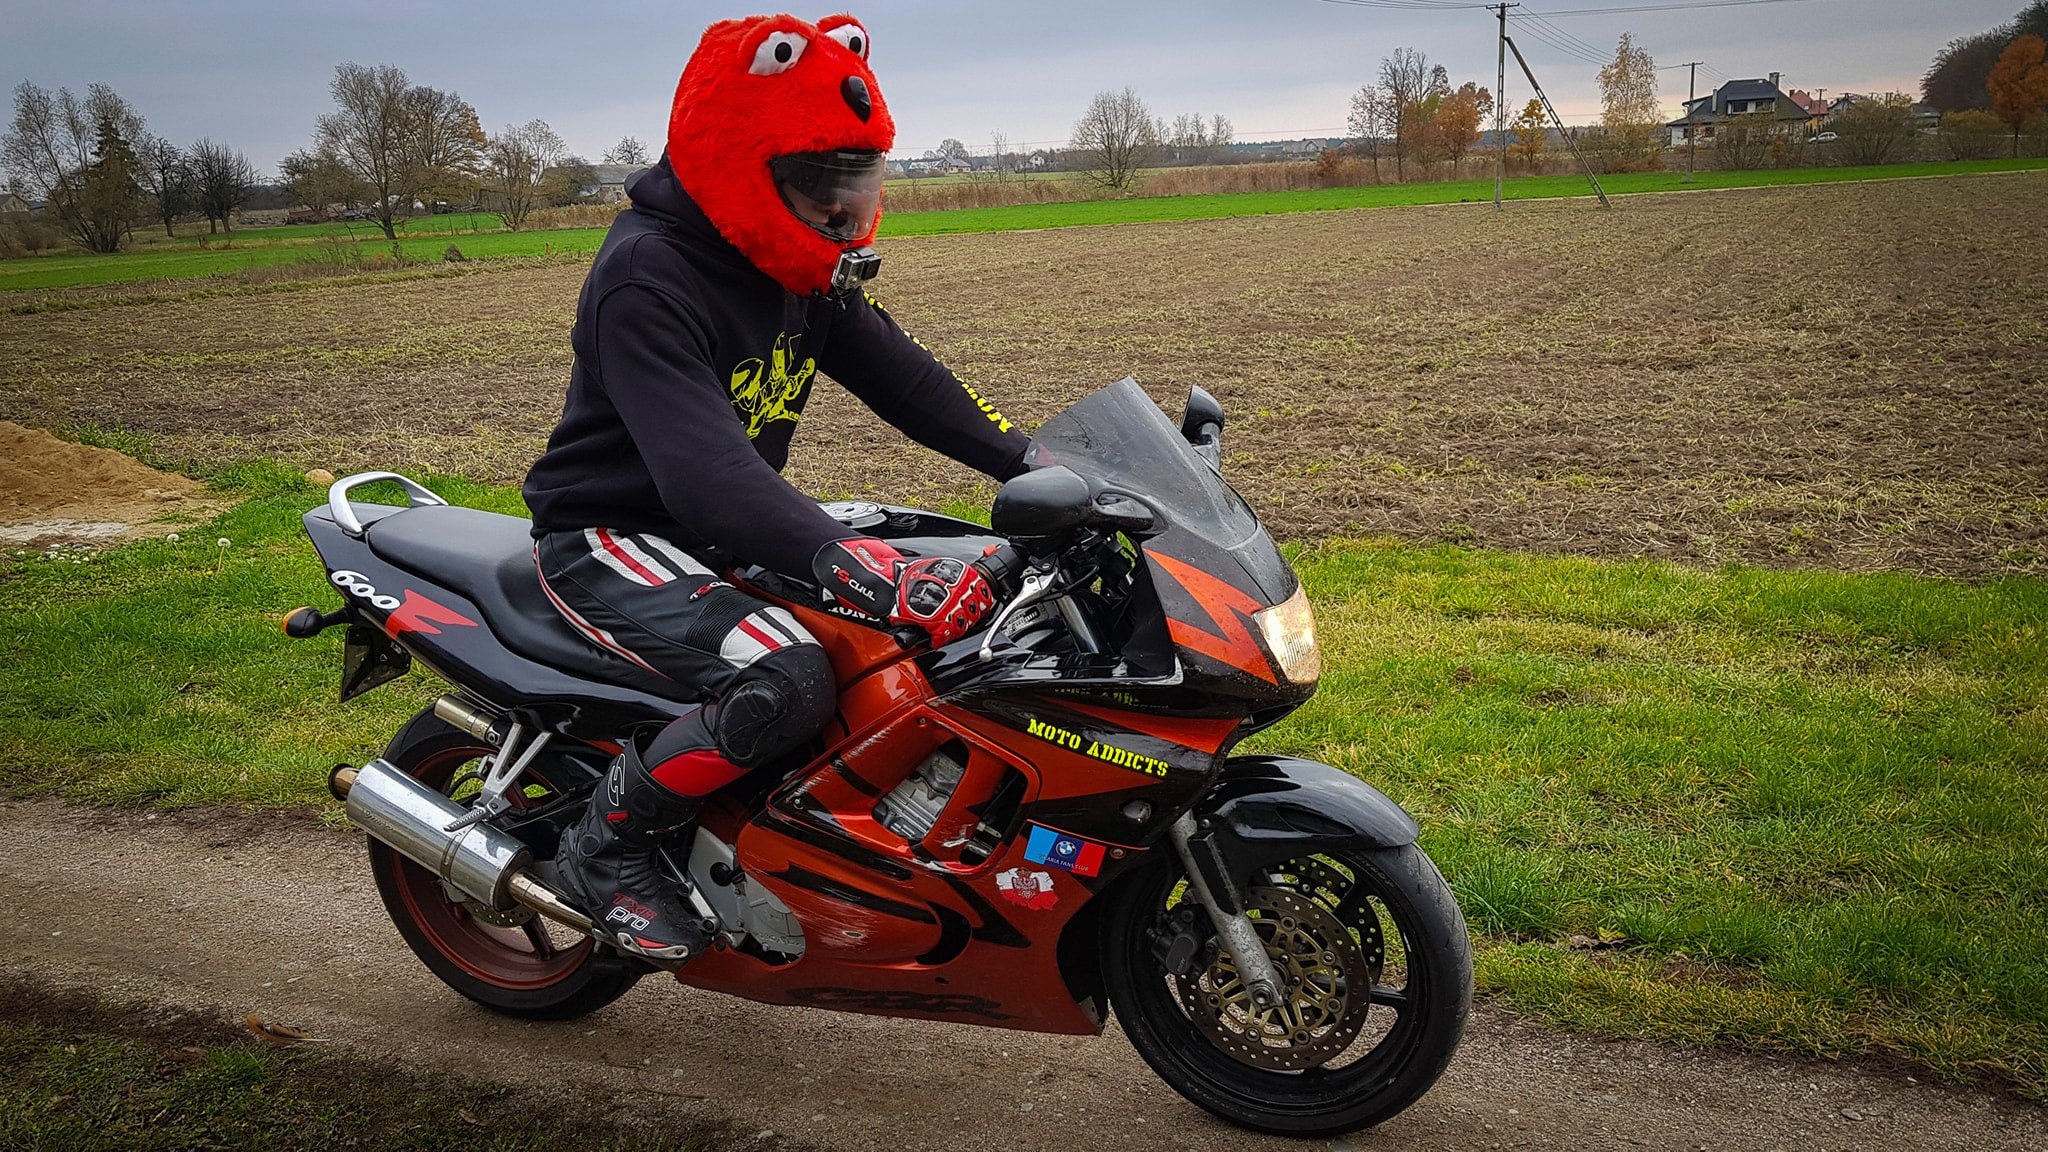 Moto-Helmüberzug lustige Tier-Motorrad-Motorradhelm-Überzüge